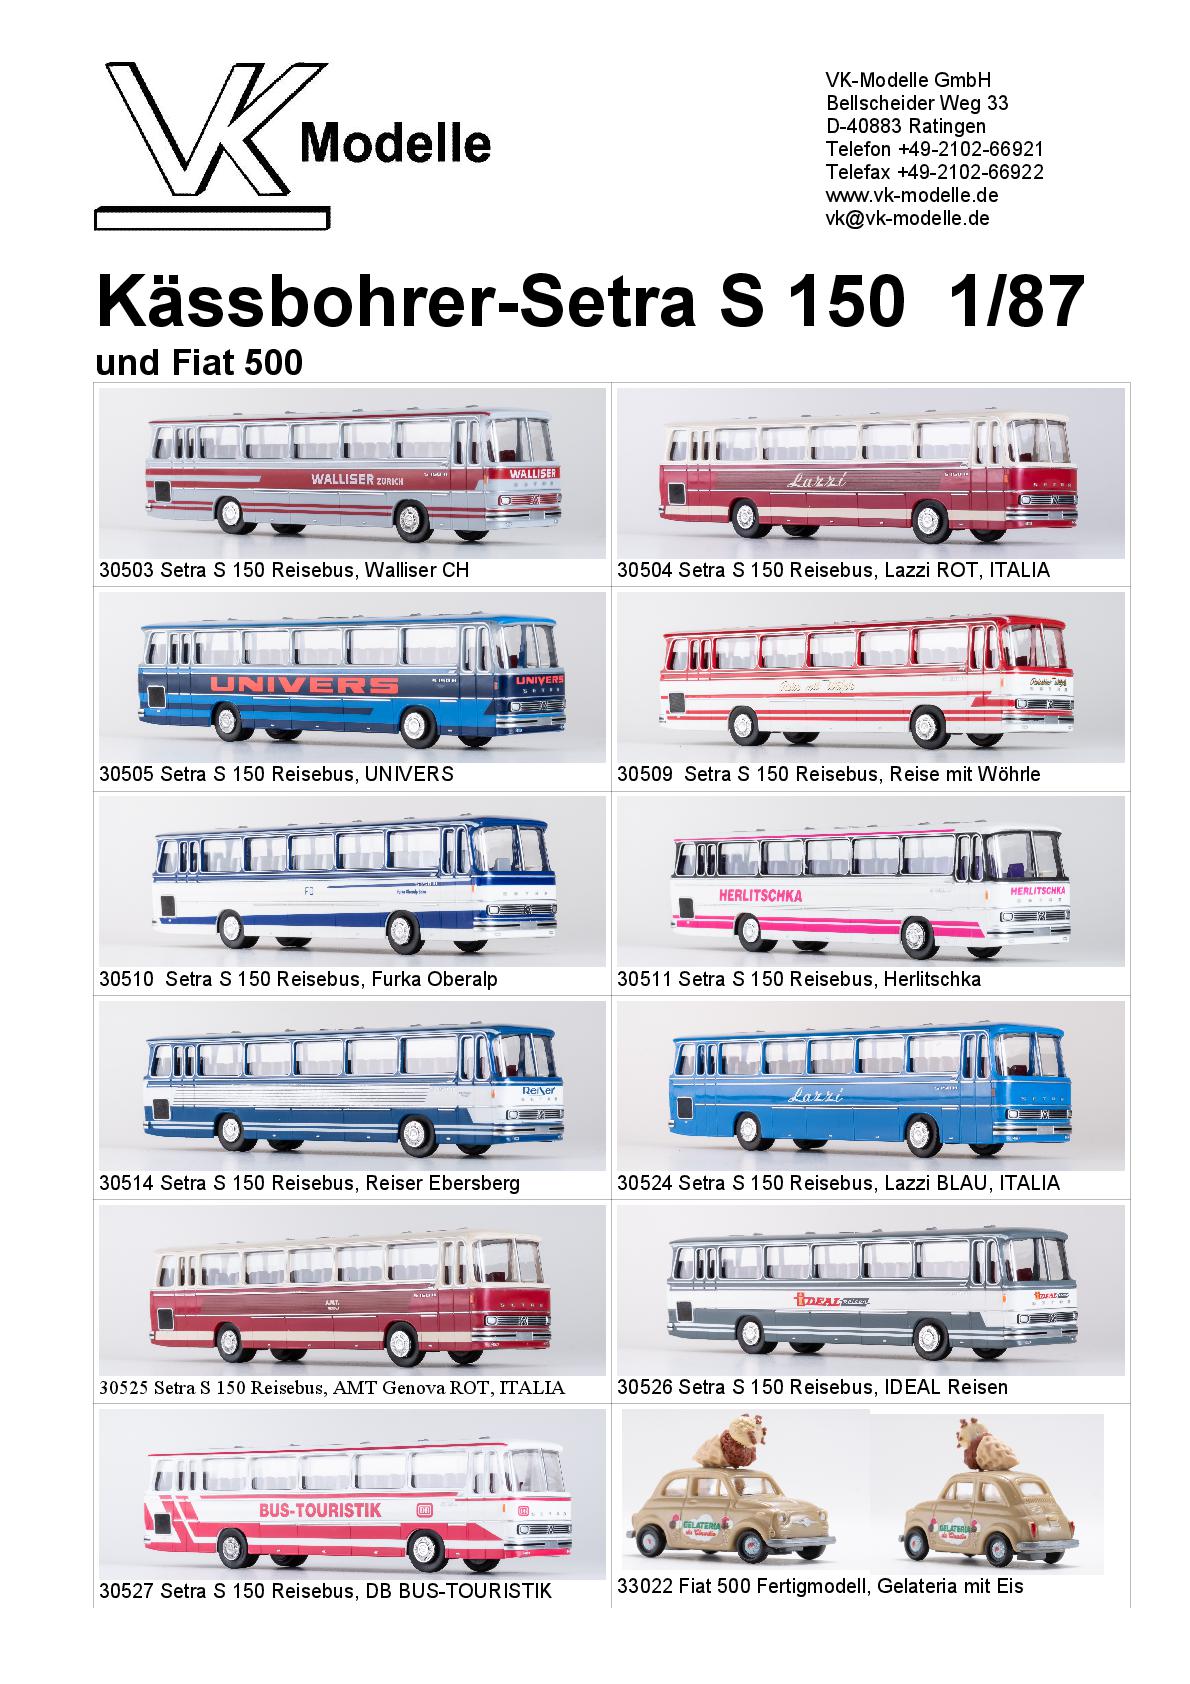 Kässbohrer-Setra S150